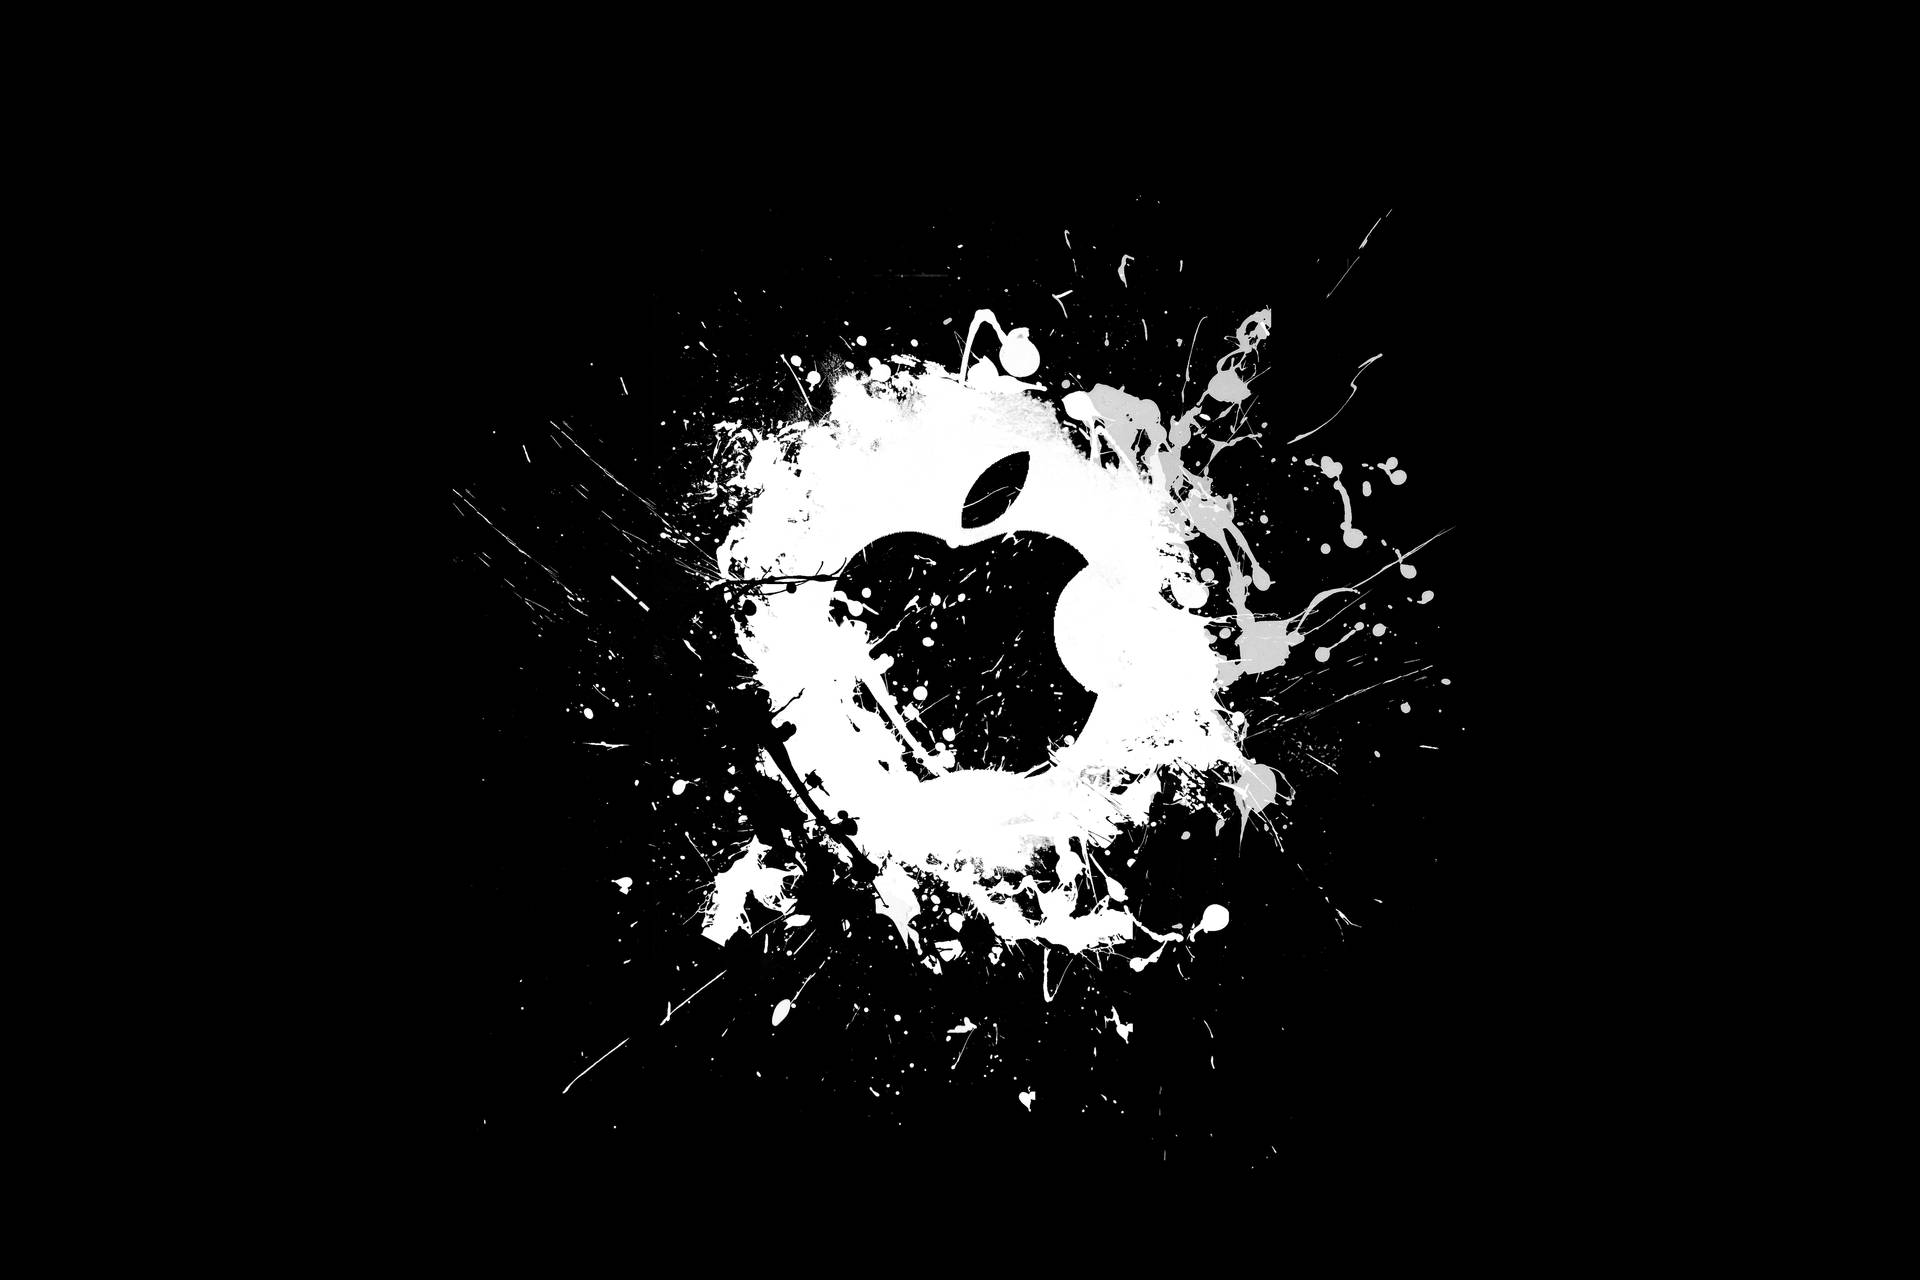 Free Apple Logo Wallpaper Downloads, [500+] Apple Logo Wallpapers for FREE  